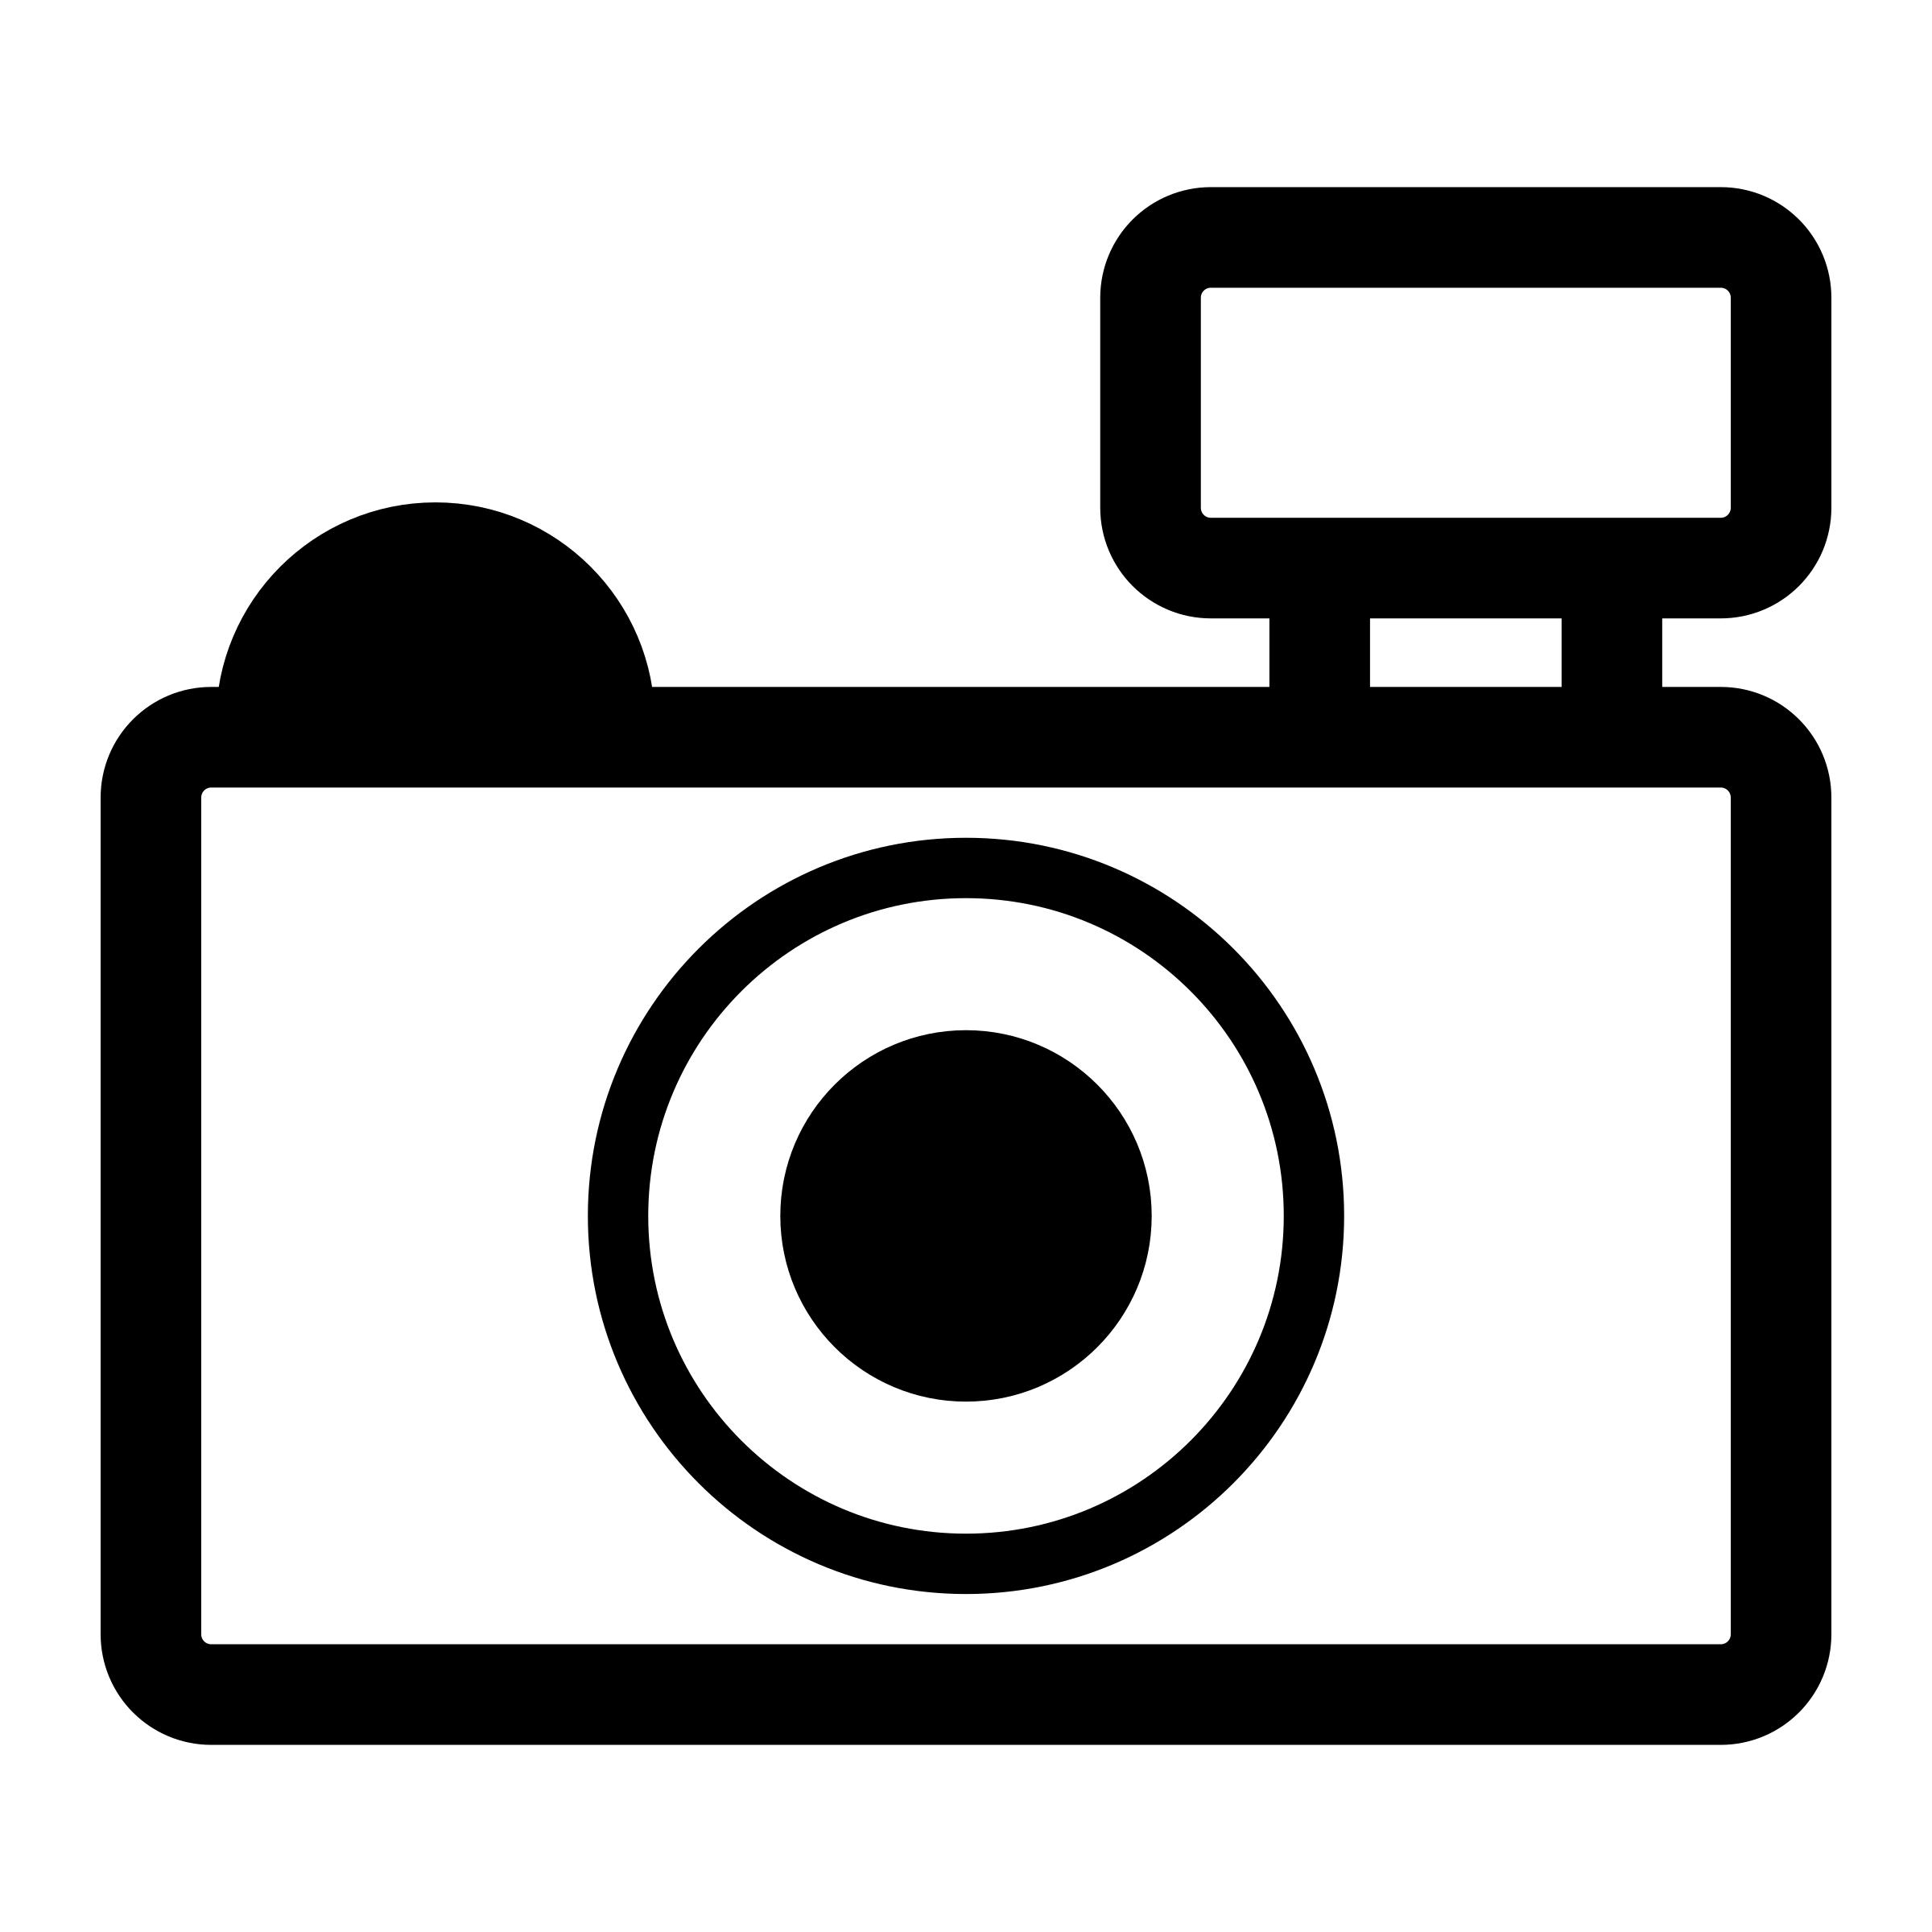 Polaroid camera clipart black and white